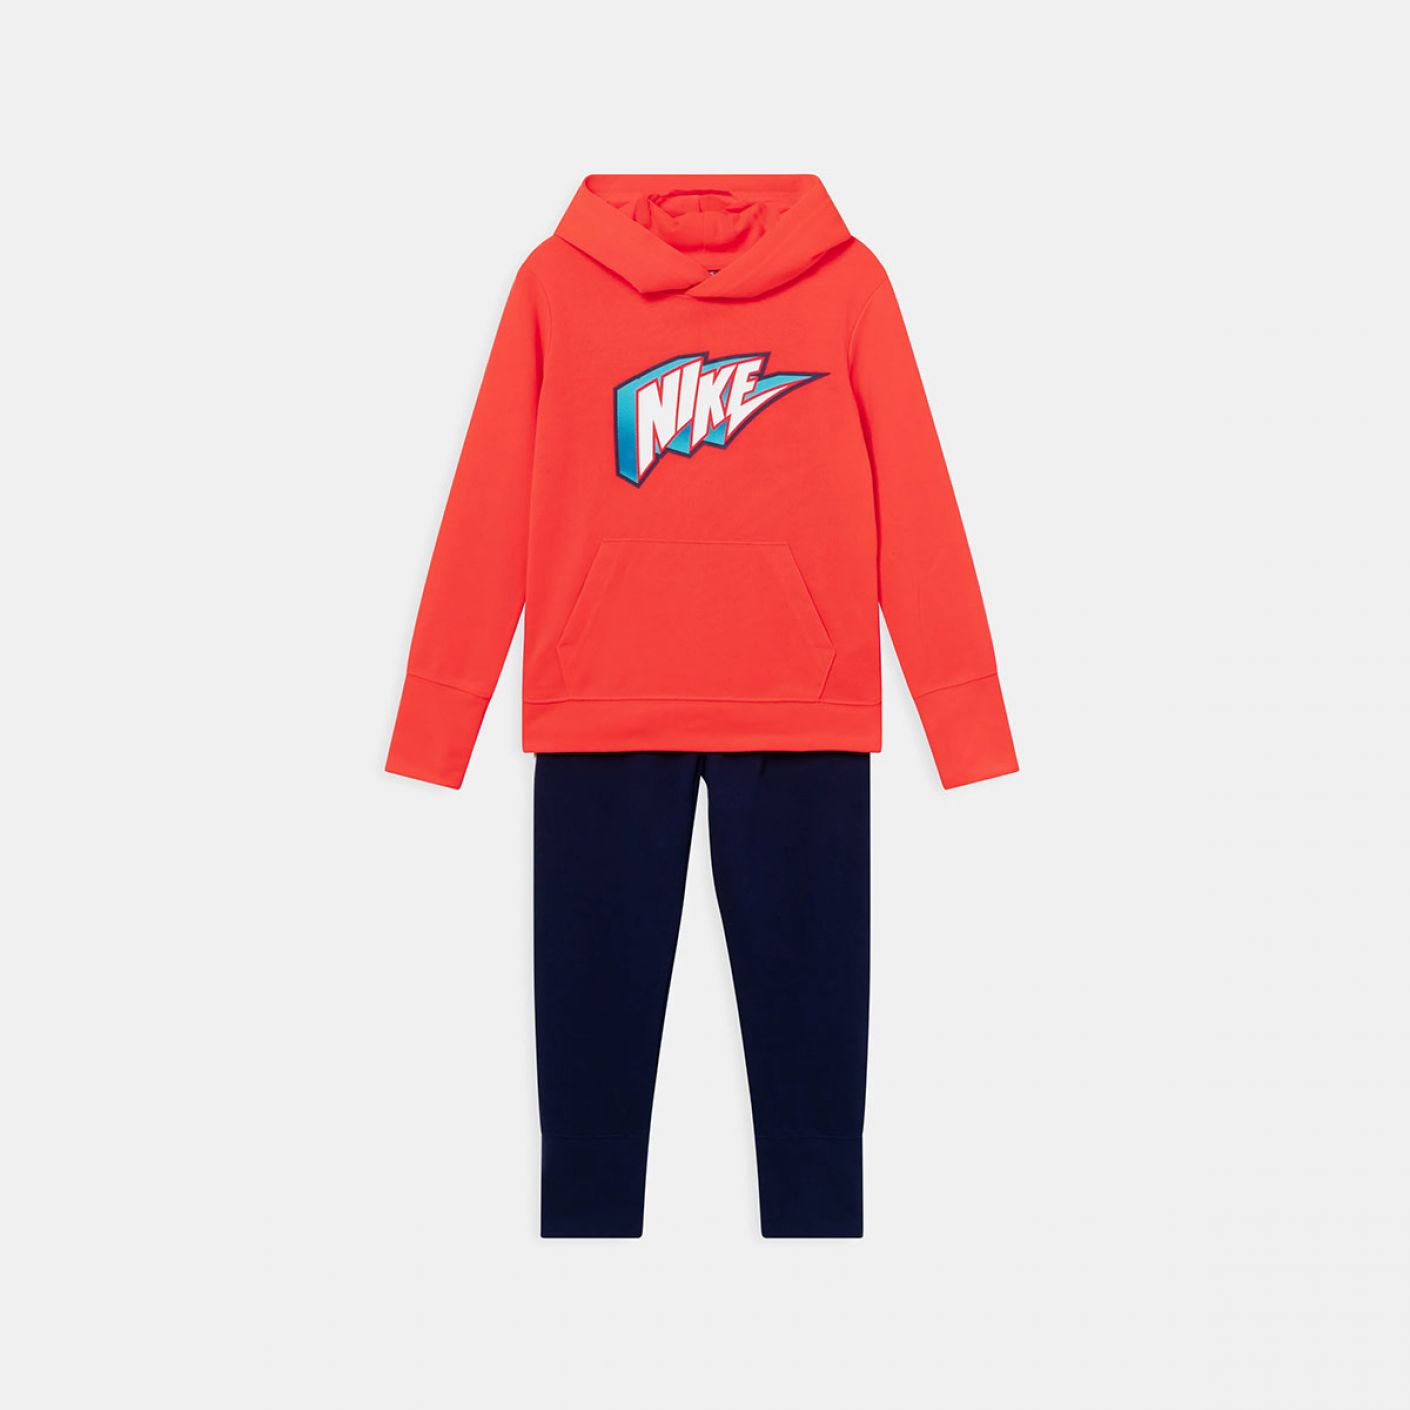 Nike Red-Blue GHG Suit for Children